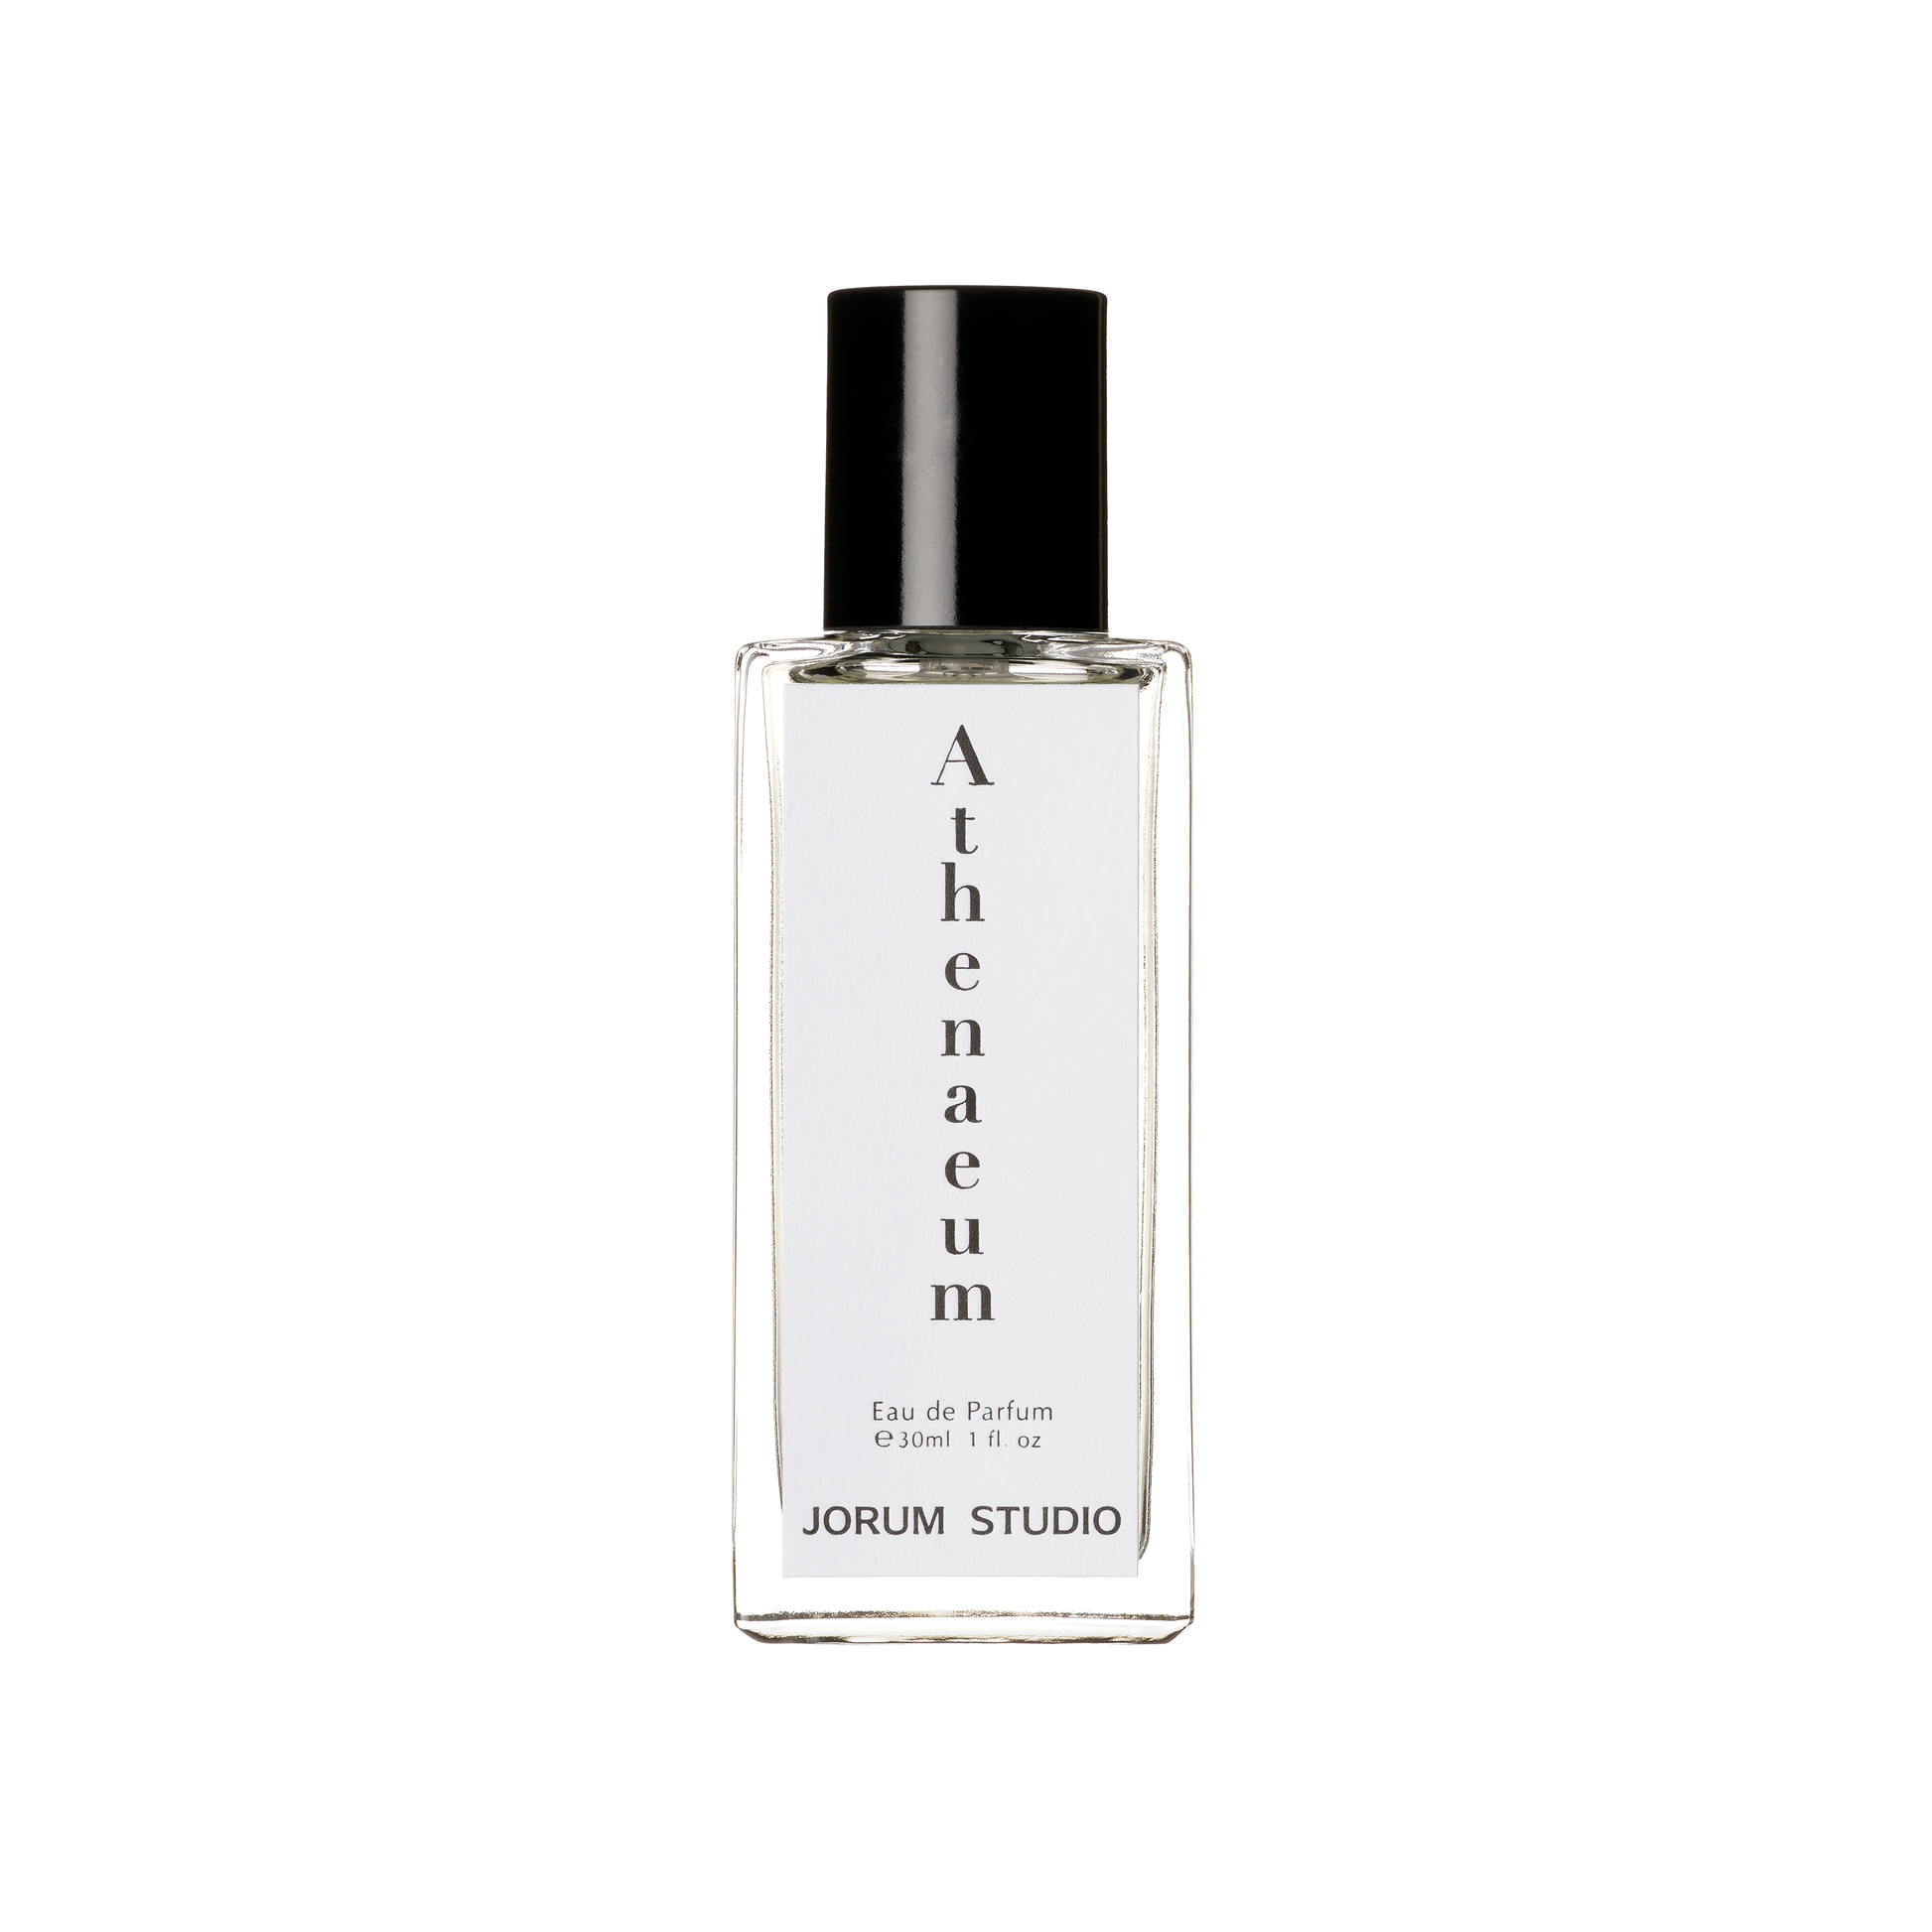 30ml bottle of Athenaeum Eau de Parfum by independent Scottish perfumers Jorum Studio